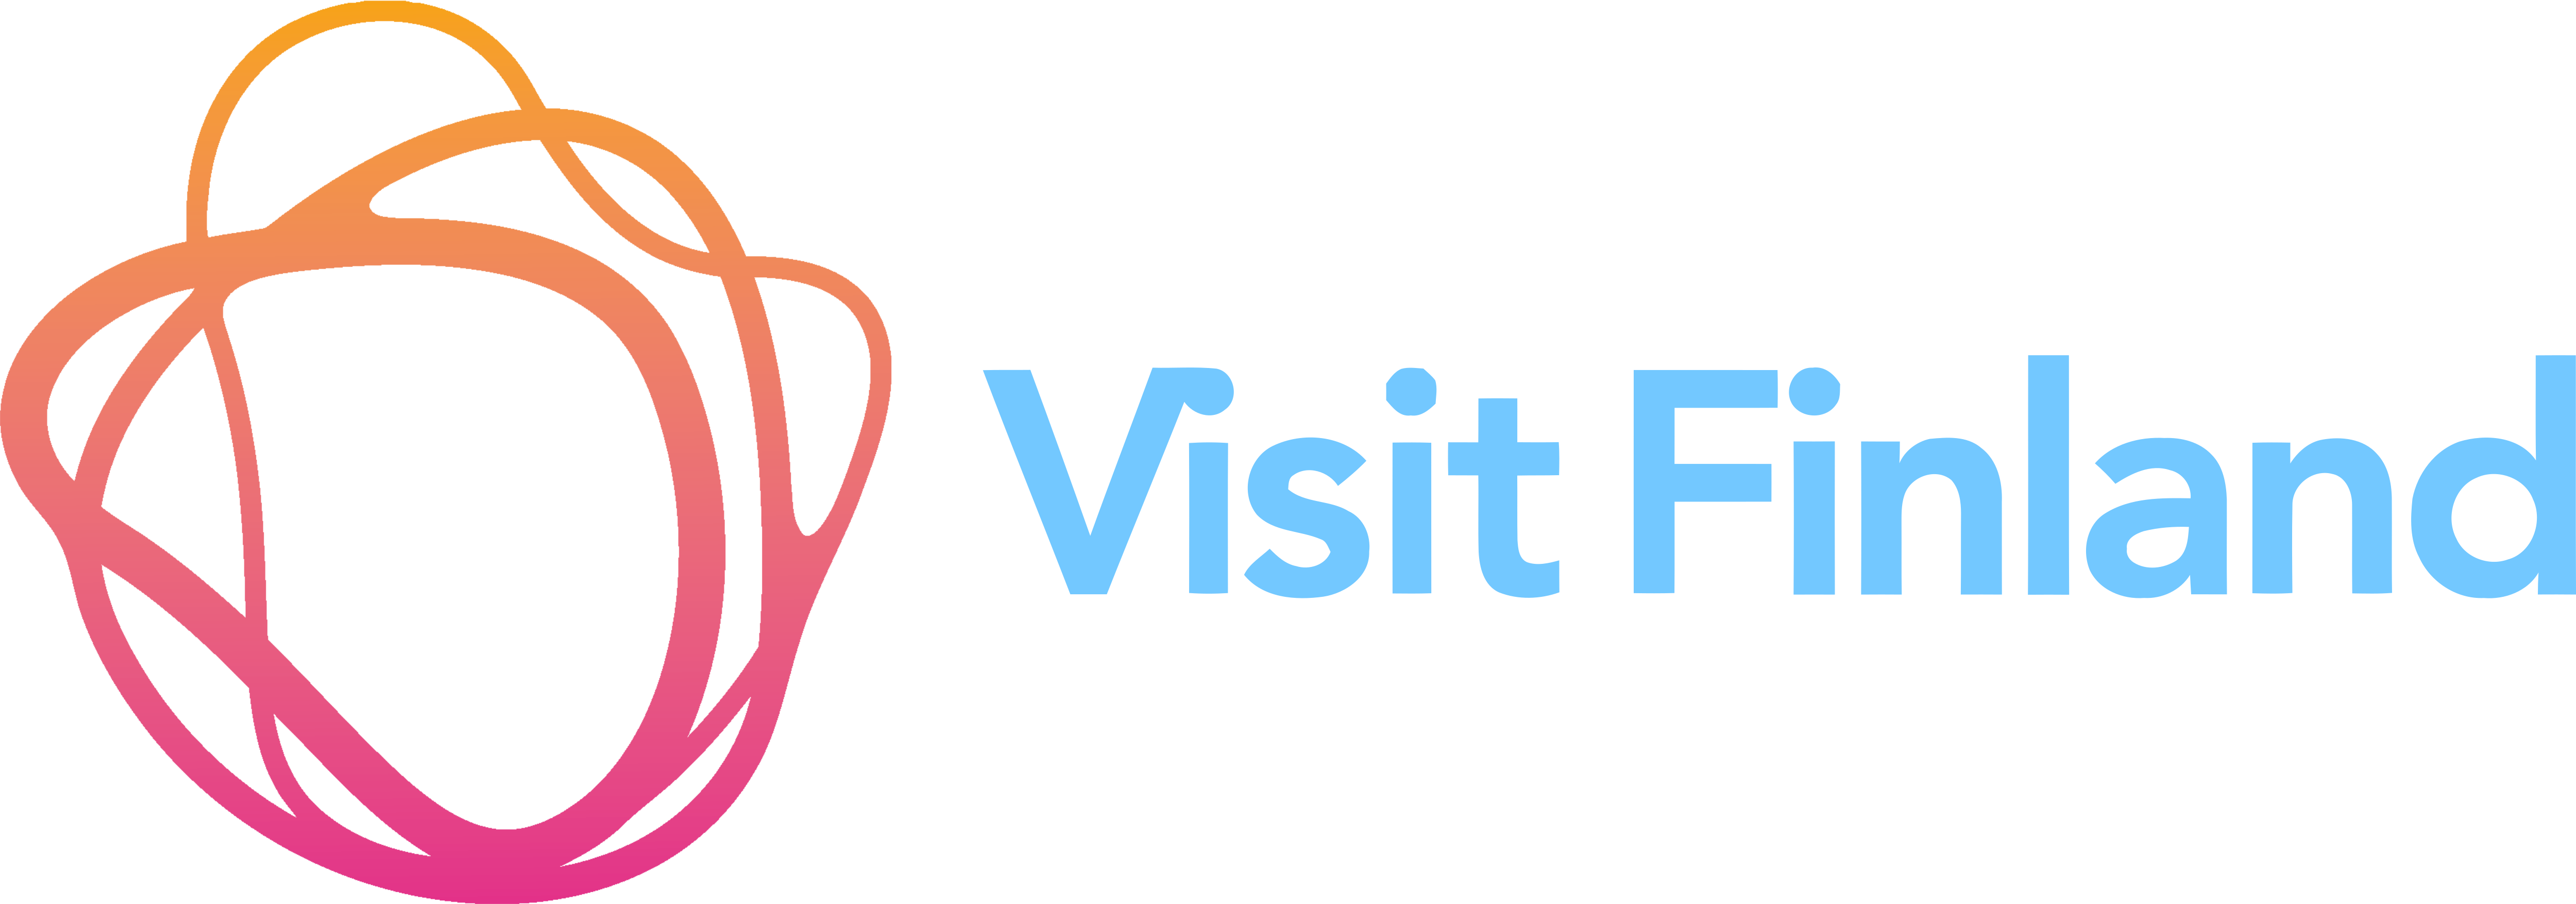 visit finland logo png